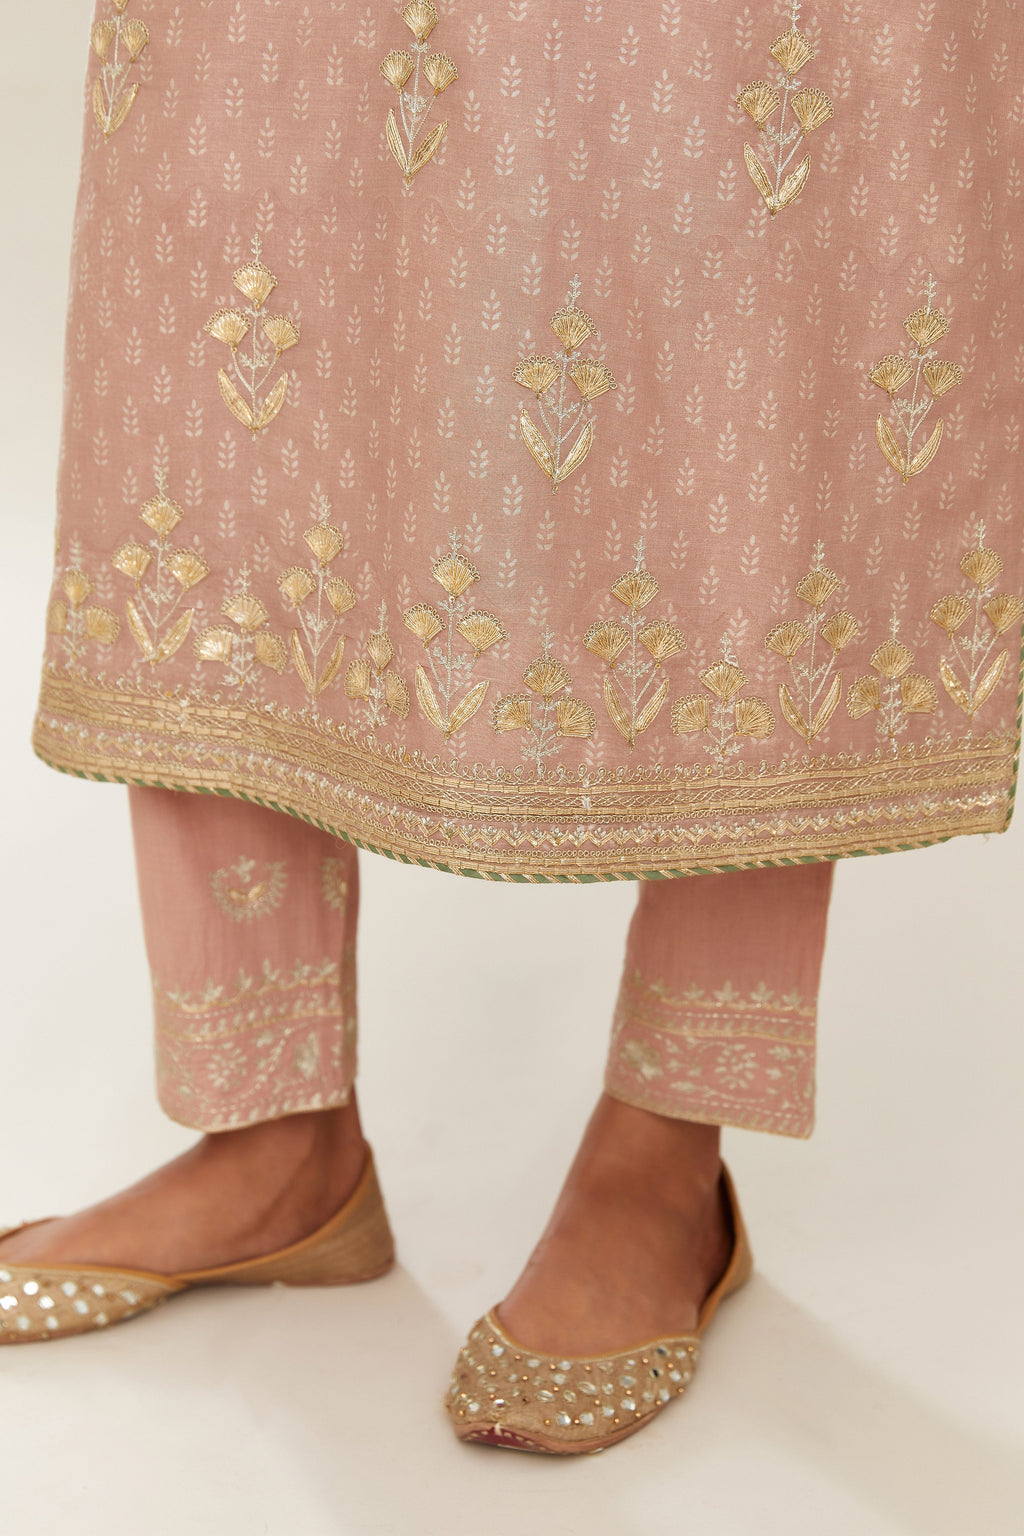 Old rose hand block printed silk chanderi kurta set with gold gota and zari embroidery butas and heavy borders at hem.